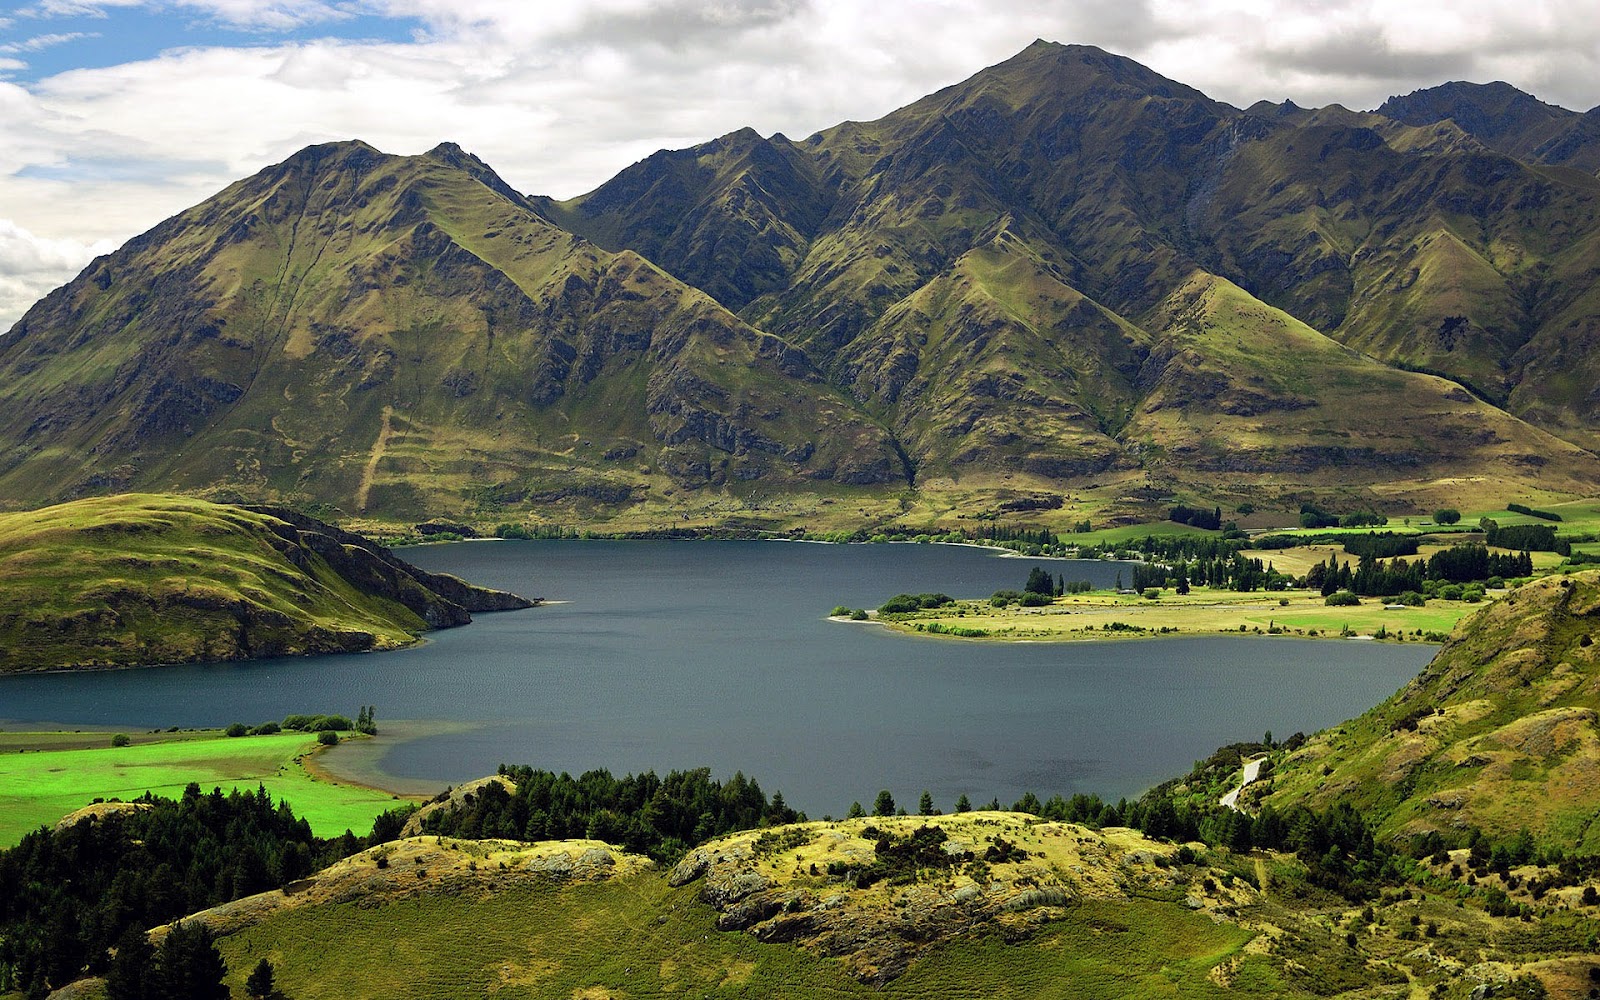 http://4.bp.blogspot.com/-jPe9qxWmP_U/UEhWnIkbVyI/AAAAAAAAA1s/s3TyxQW4LMg/s1600/Beautiful-lake-wanaka-New-Zealand-full-HD-nature-background-wallpaper-for-laptop-widescreen.jpg